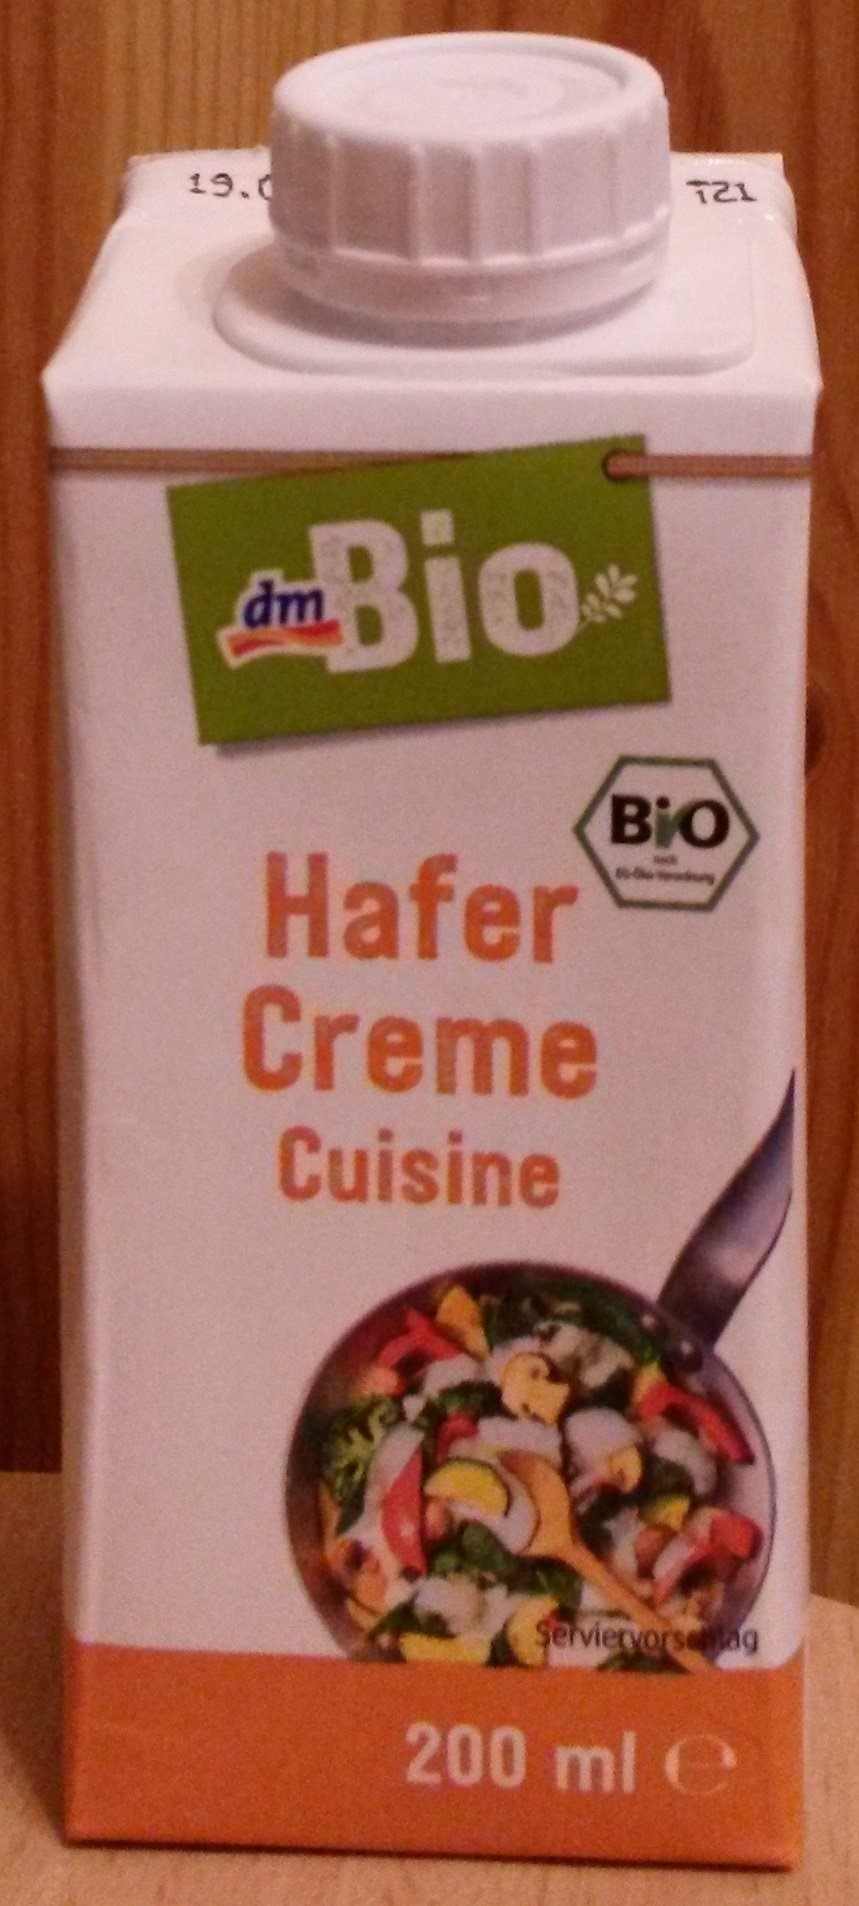 Hafer Creme Cuisine - Product - de